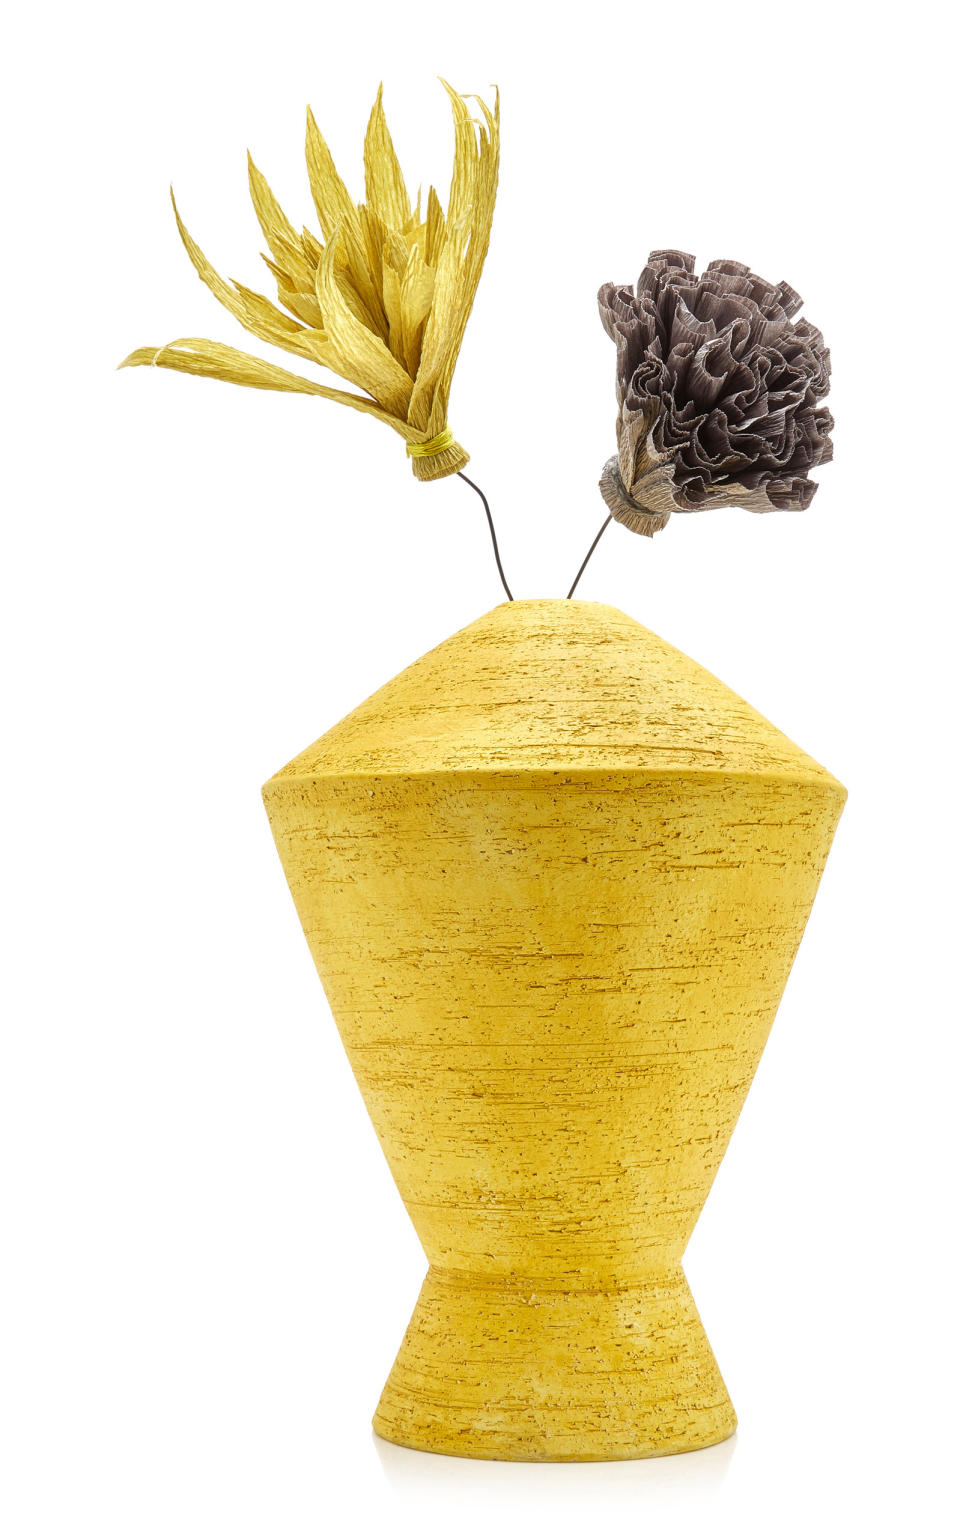 2) Zeno Floral Crepe Paper and Ceramic Vase by Federica Bubani